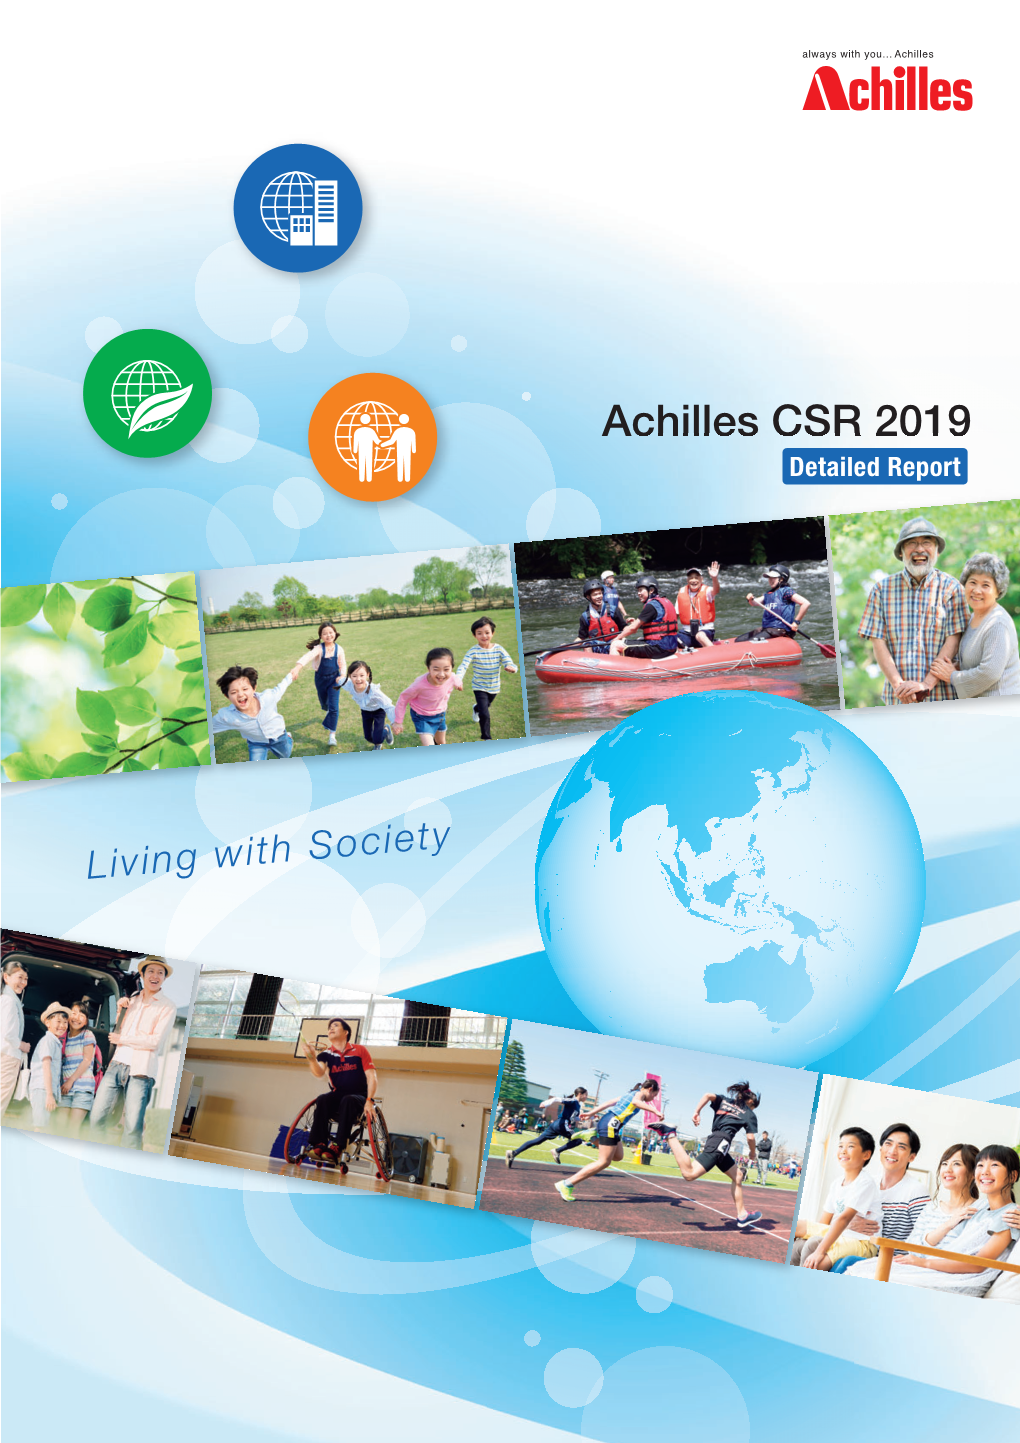 Achilles CSR 2019 Detailed Report